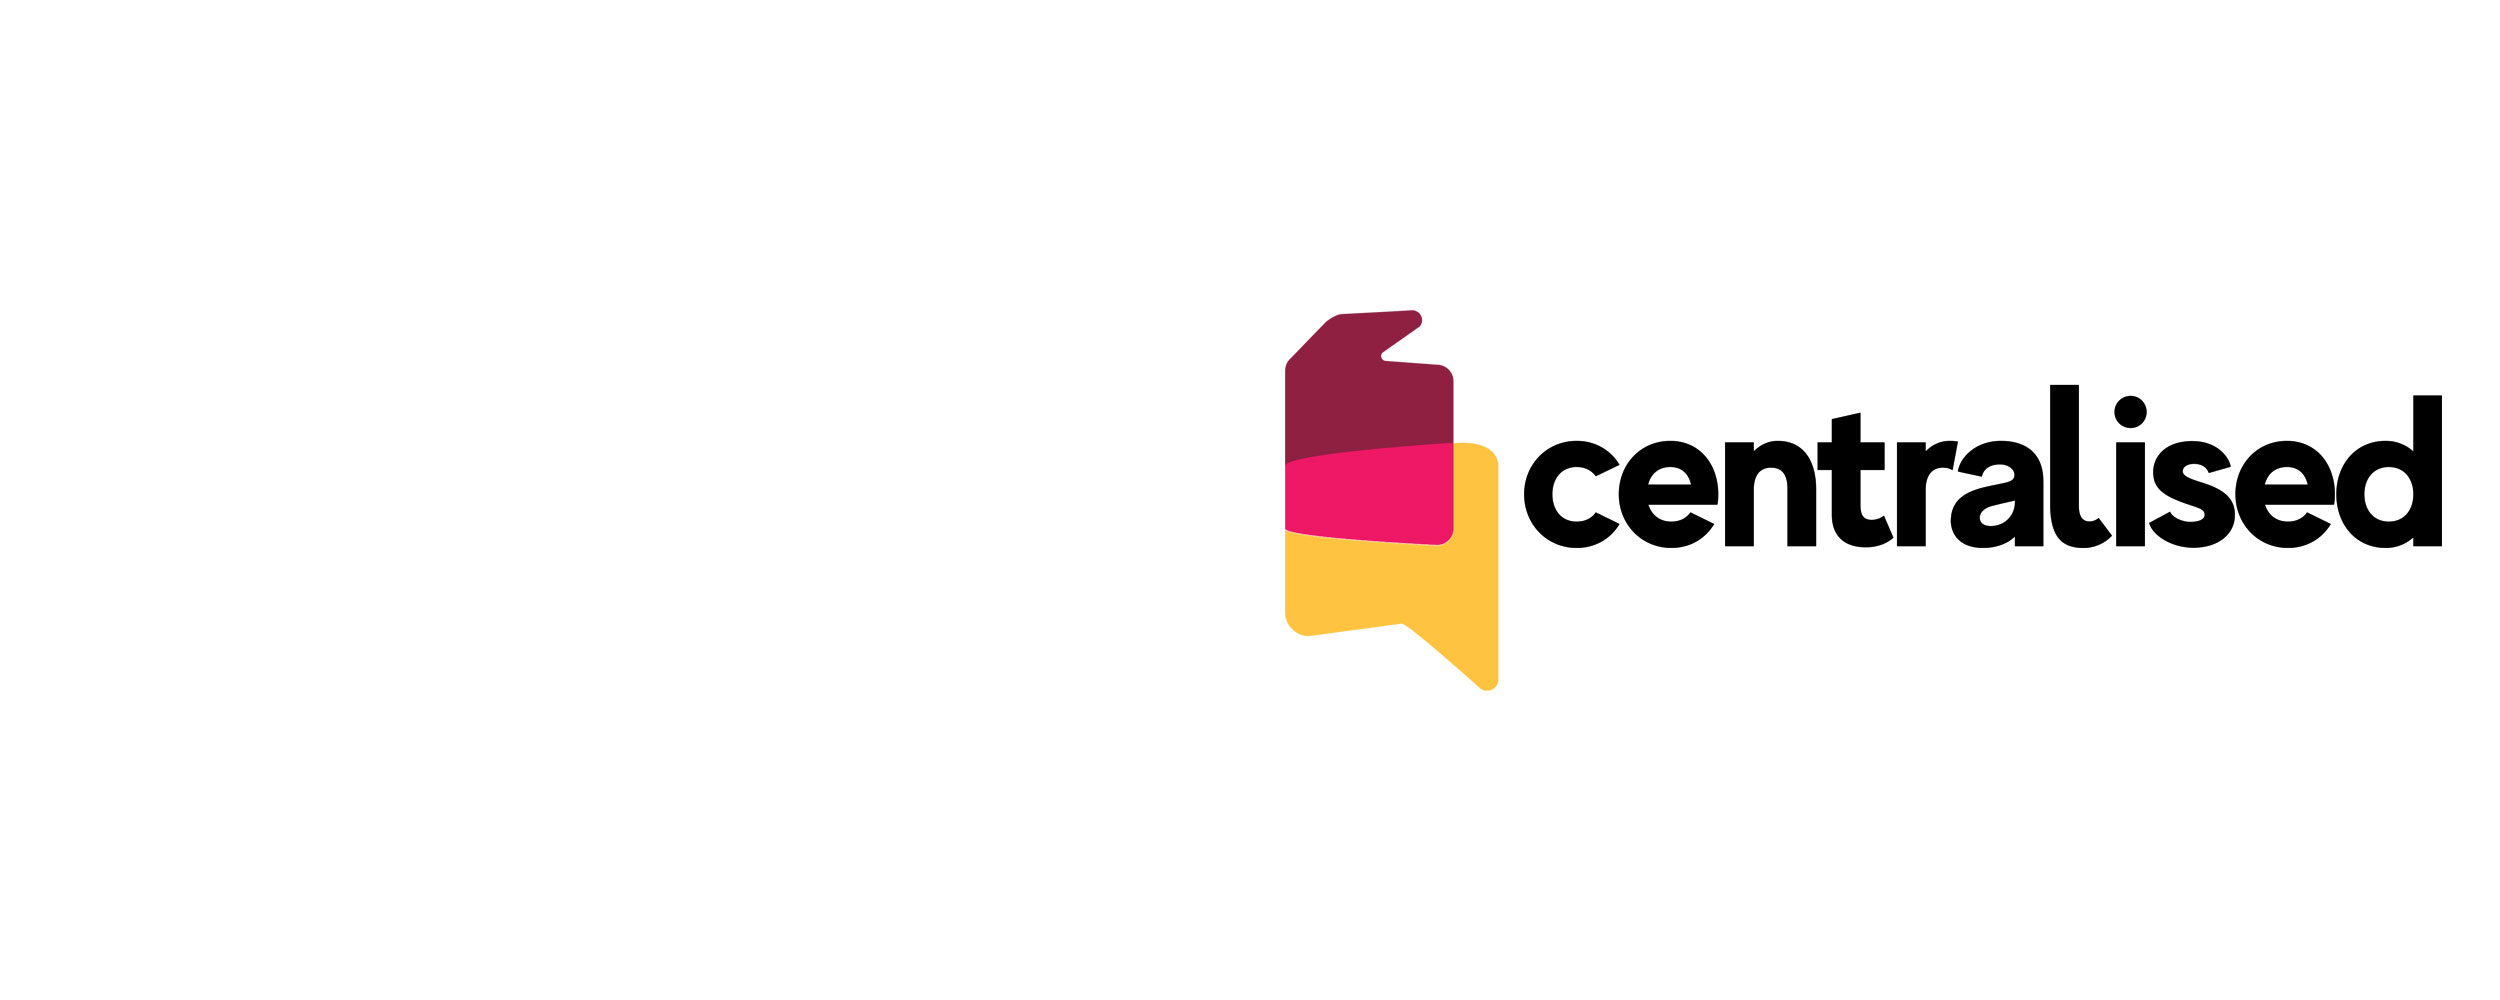 Centralised logo - defcon right